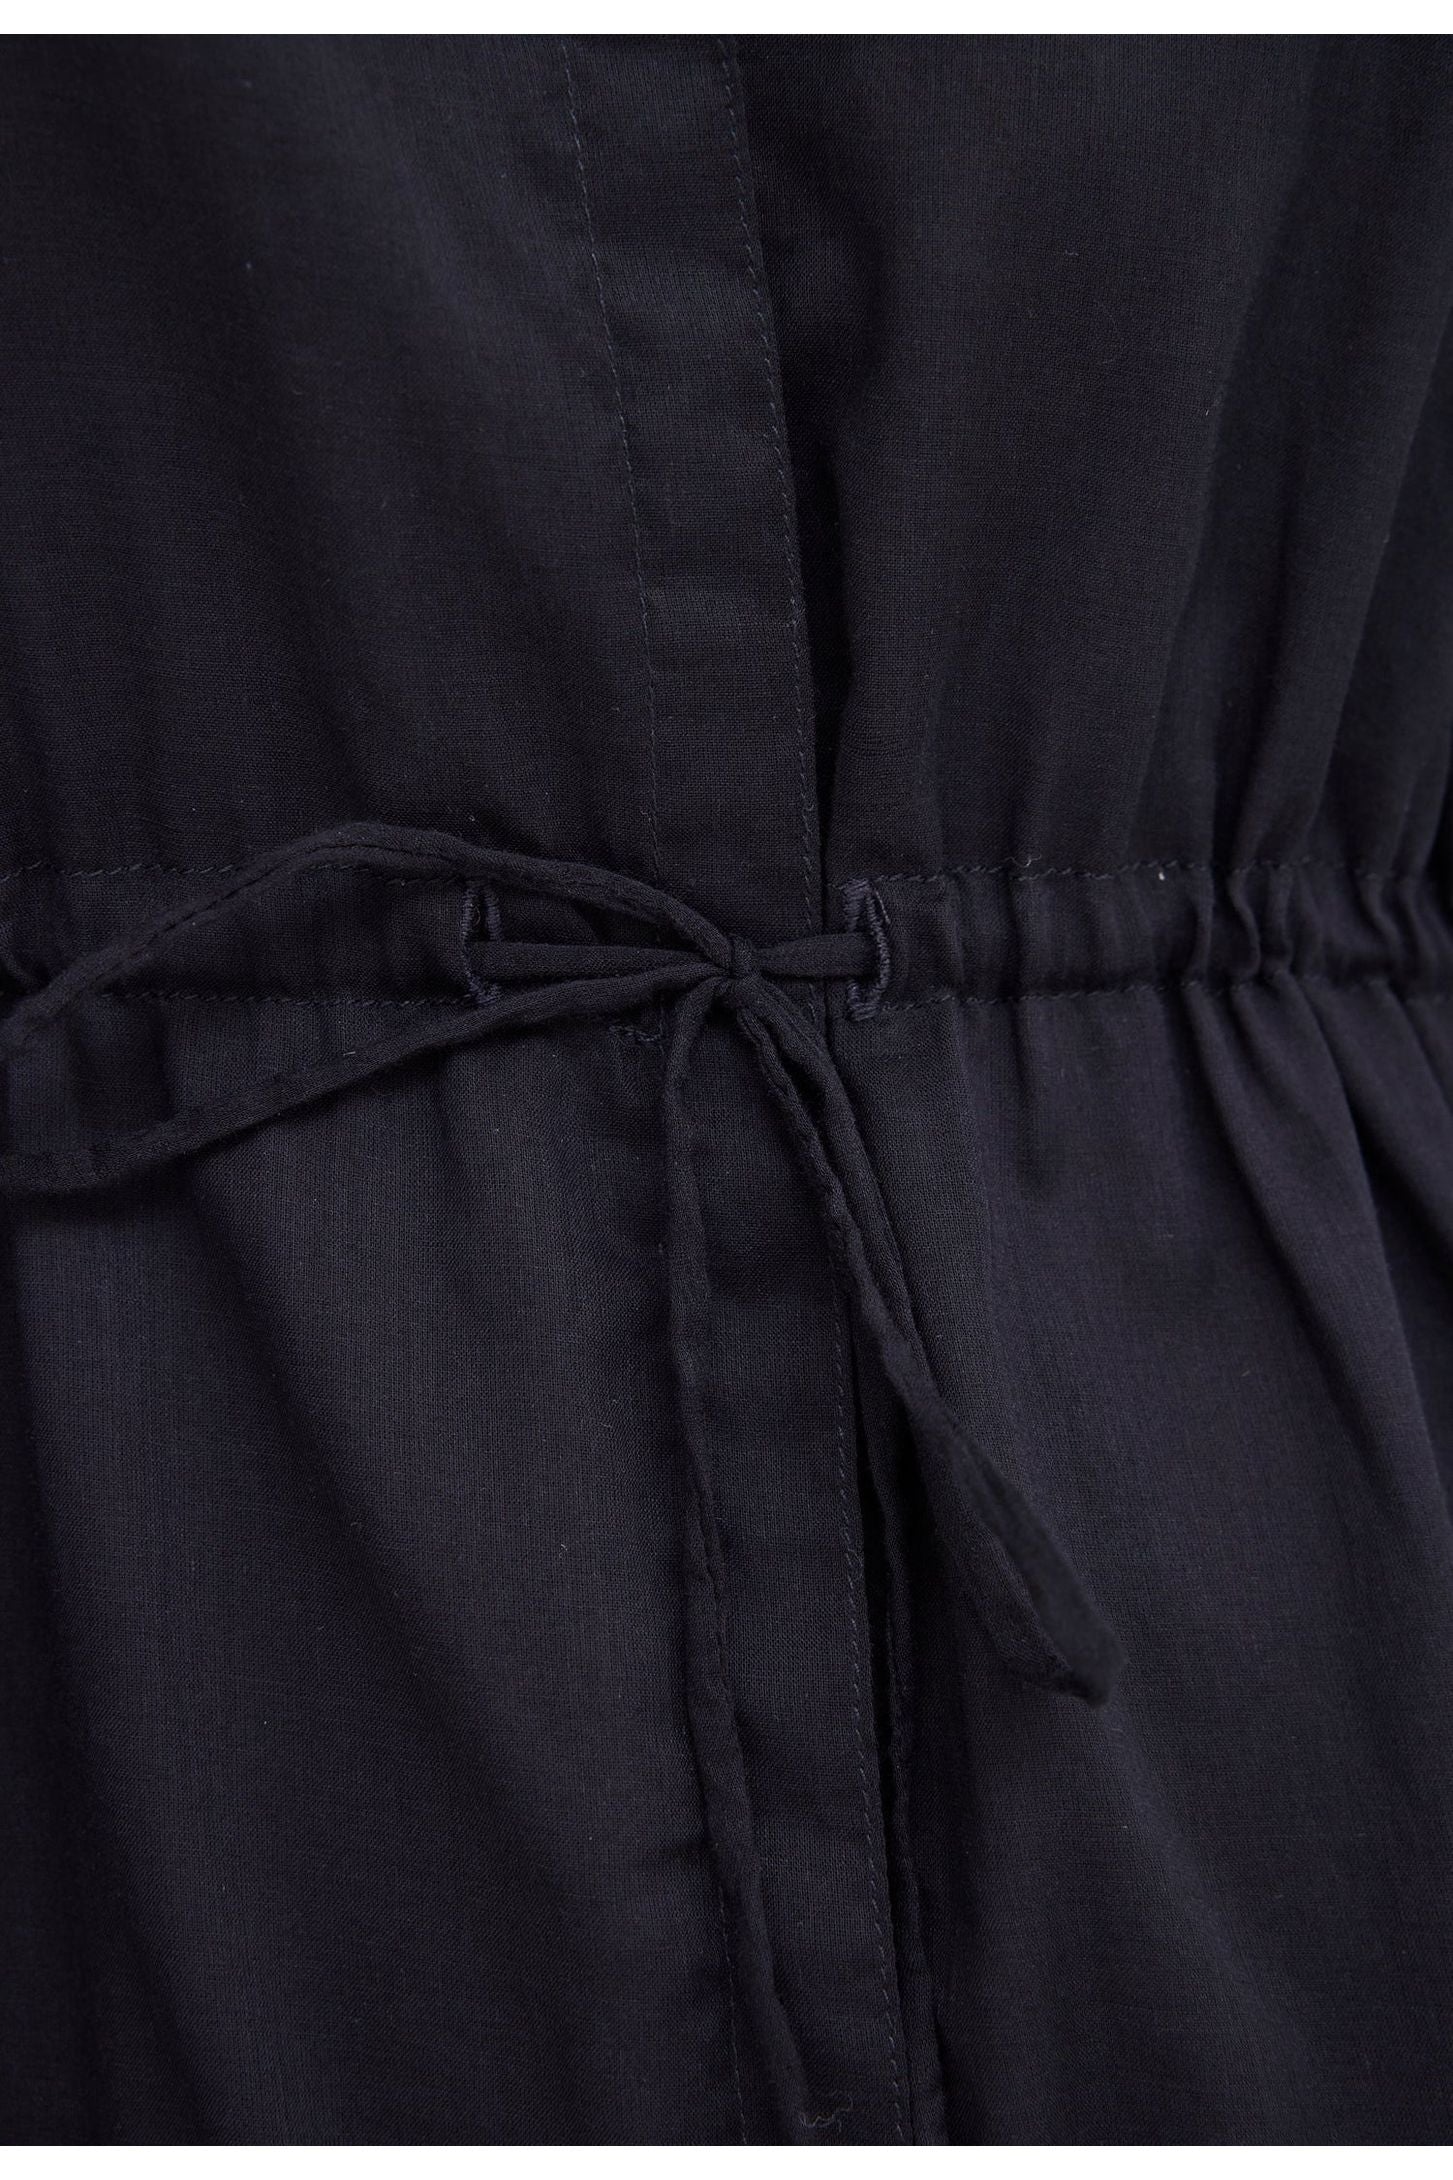 Delmar Dress in Black by Jac + Jack